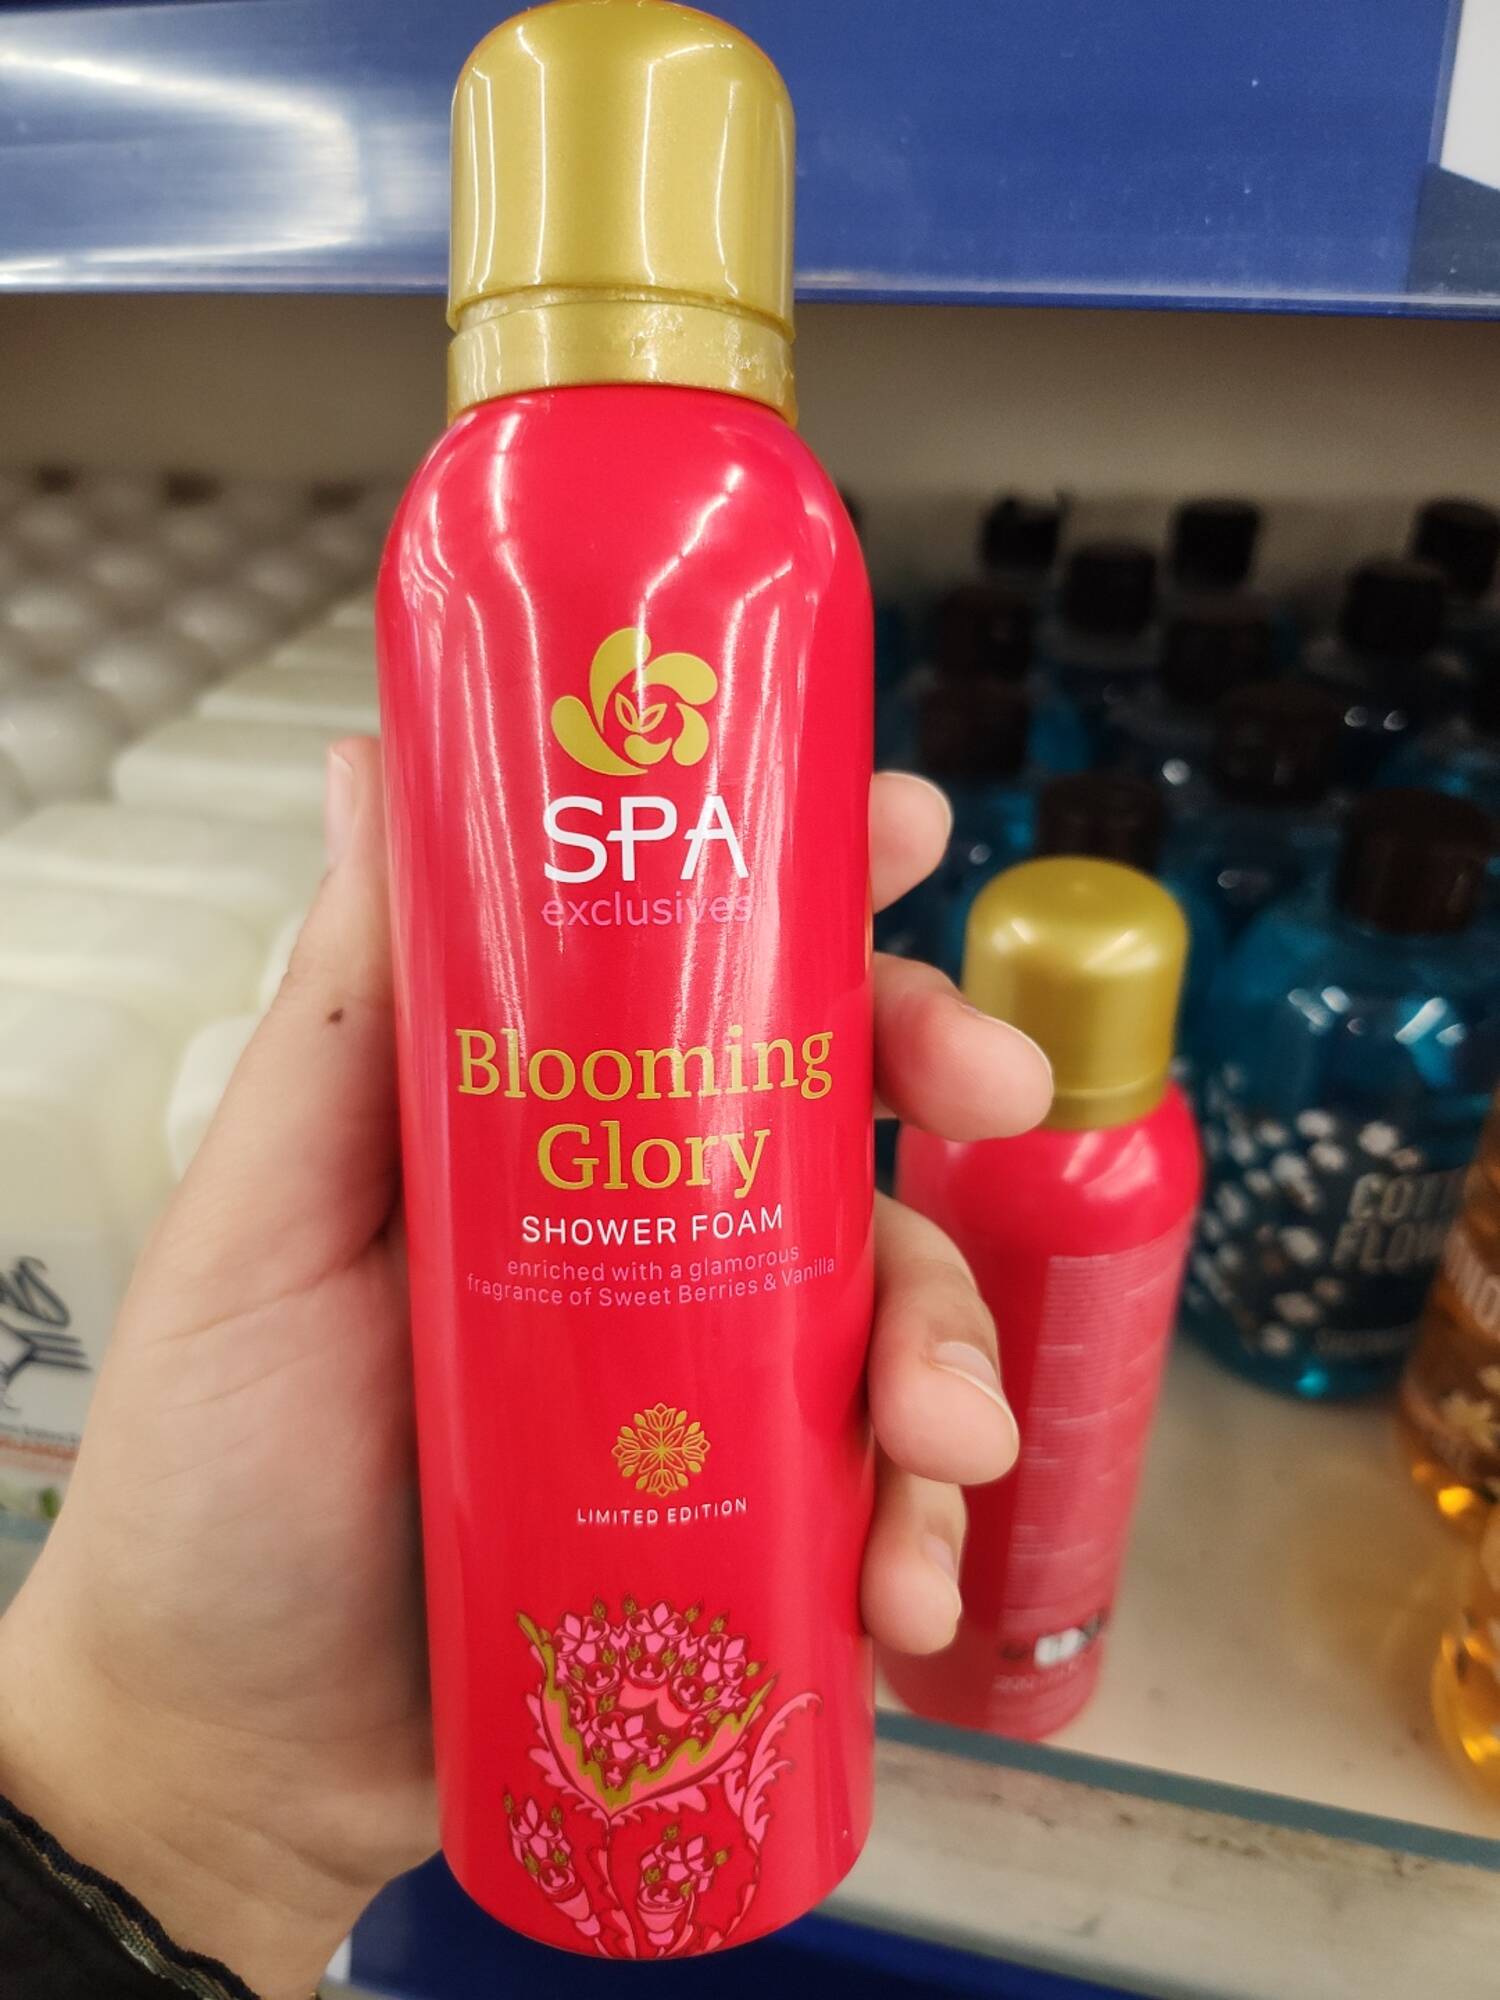 SPA - Blooming glory - Shower foam